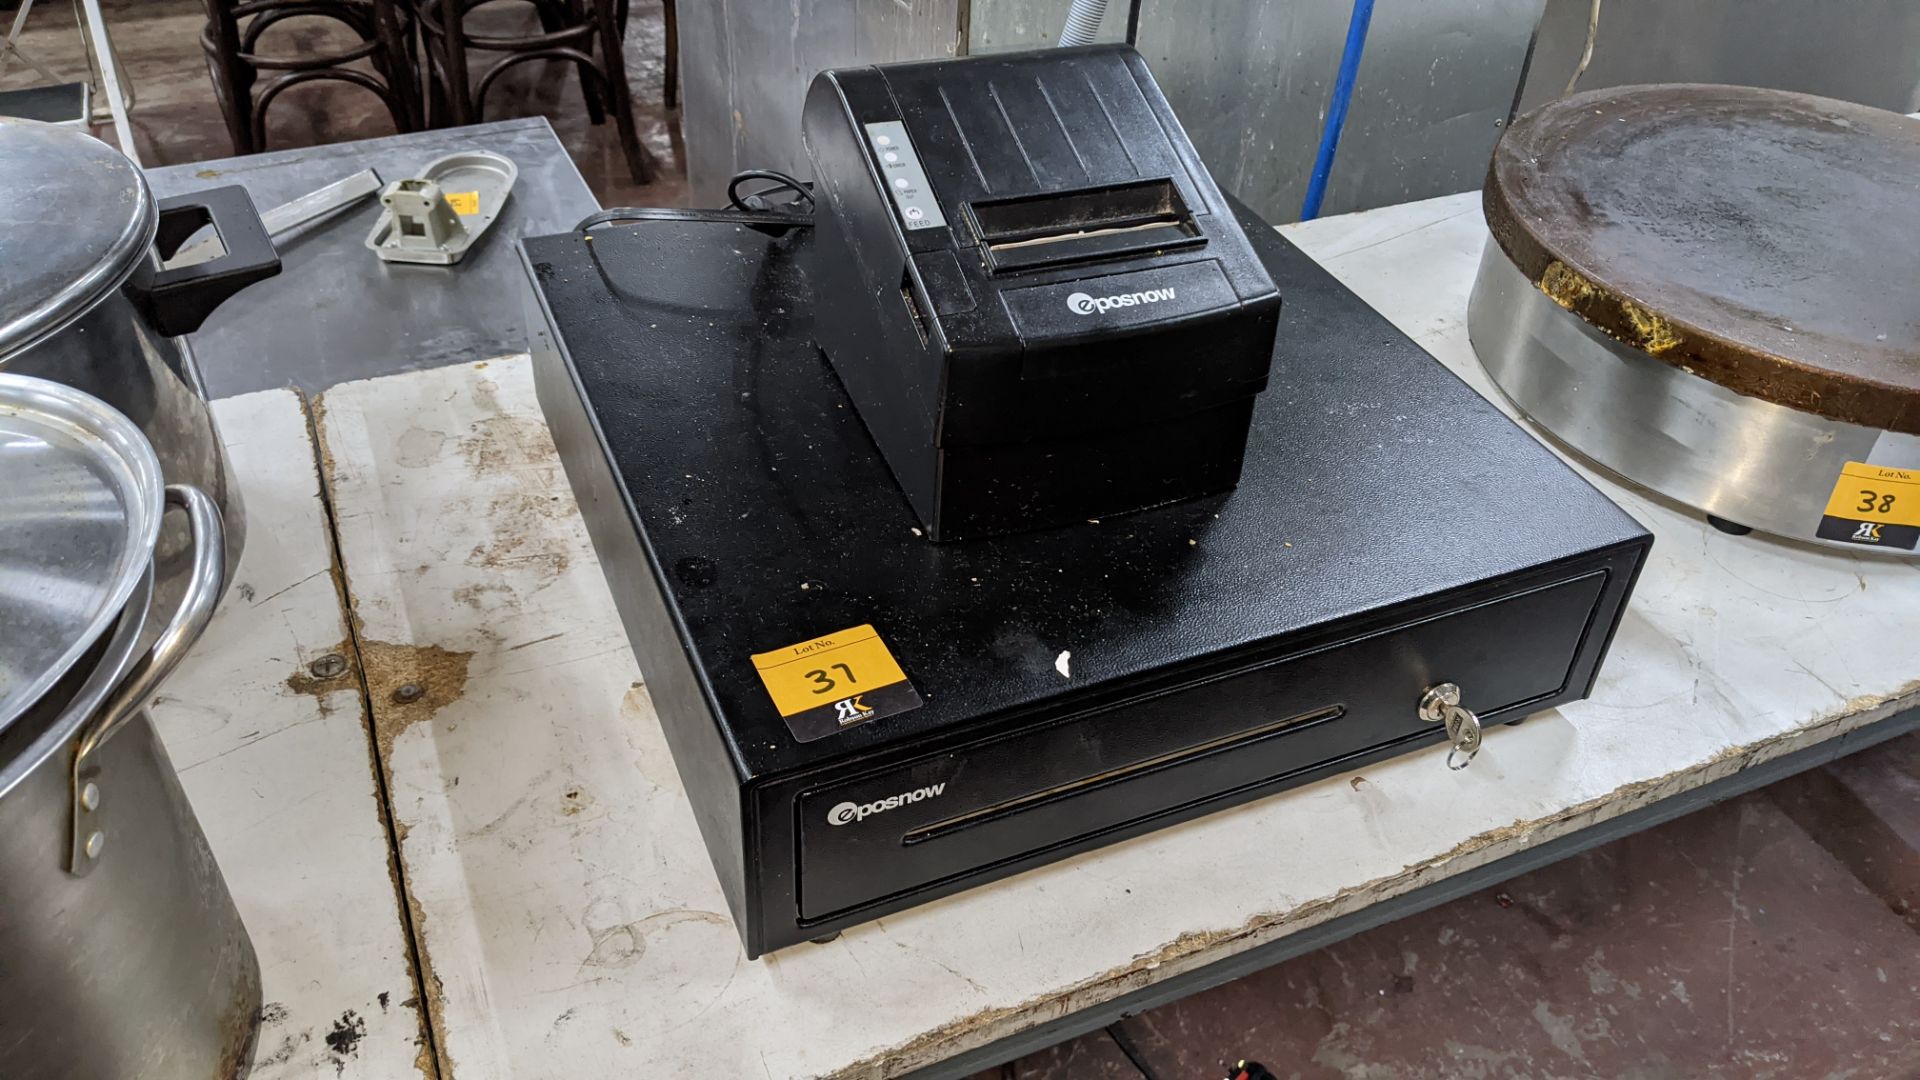 Posnow thermal receipt printer & cash drawer with key